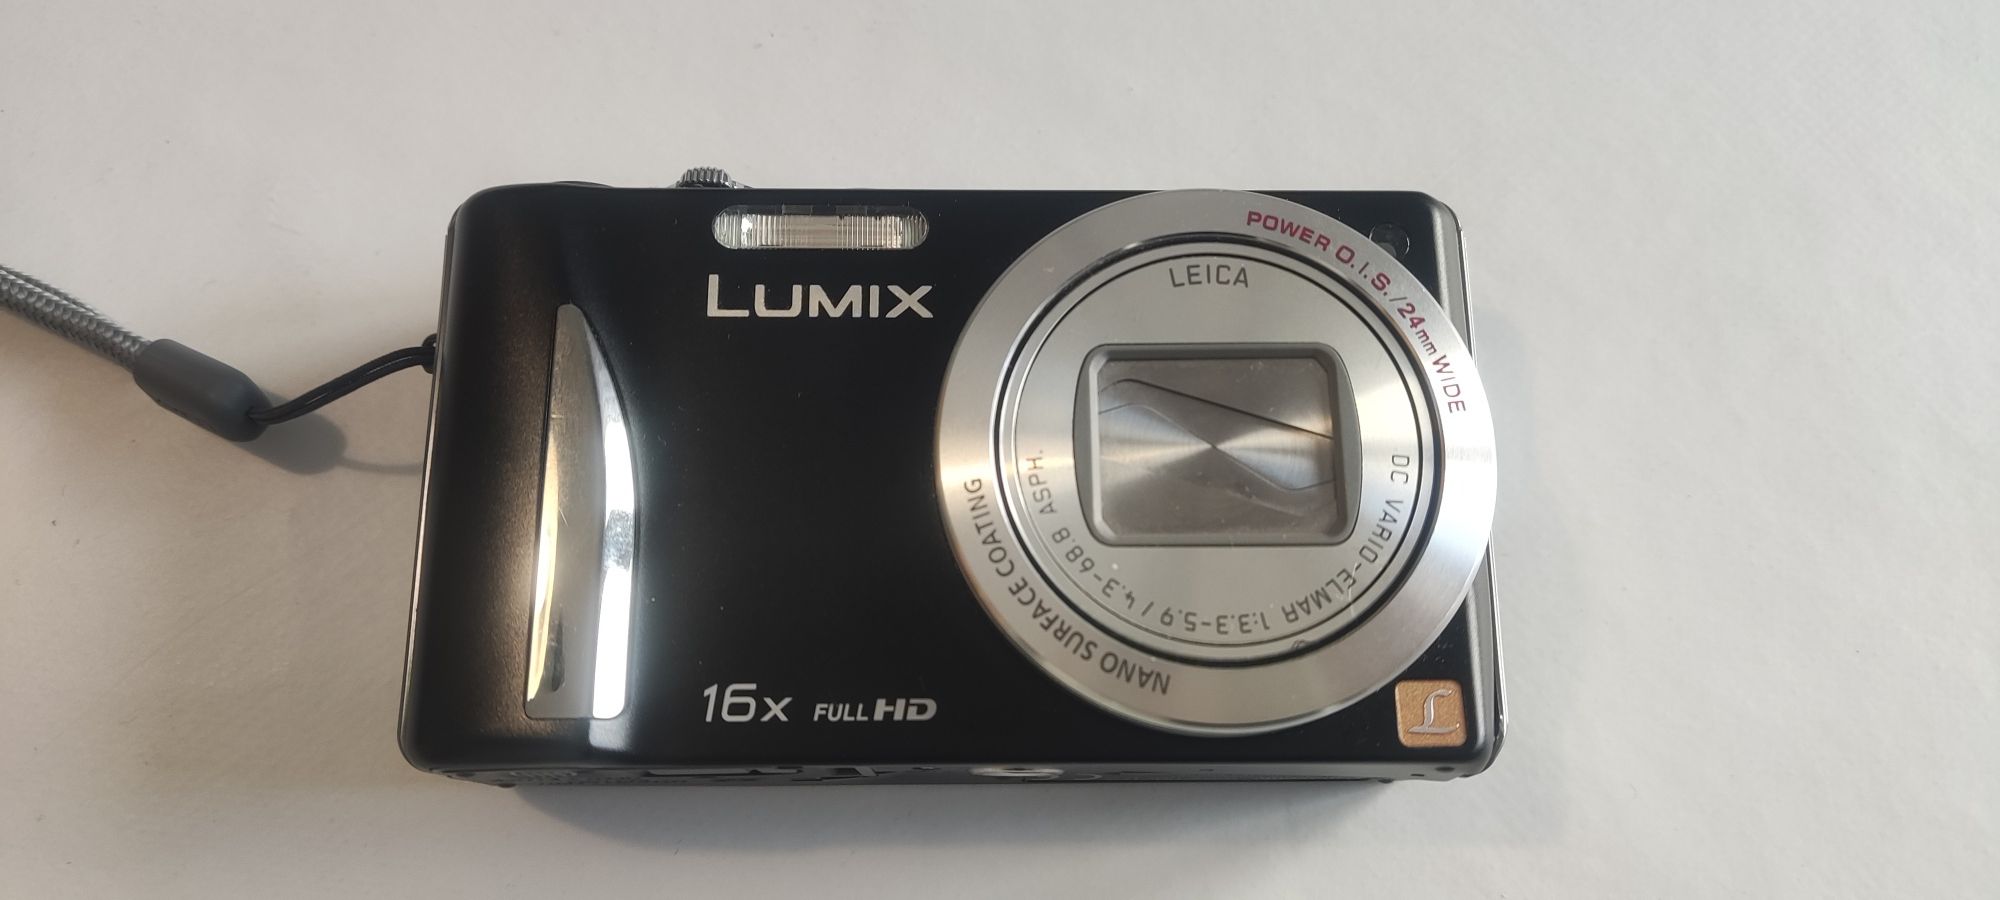 Panasonic LUMIX DMC-TZ25 preta máquina fotográfica digital